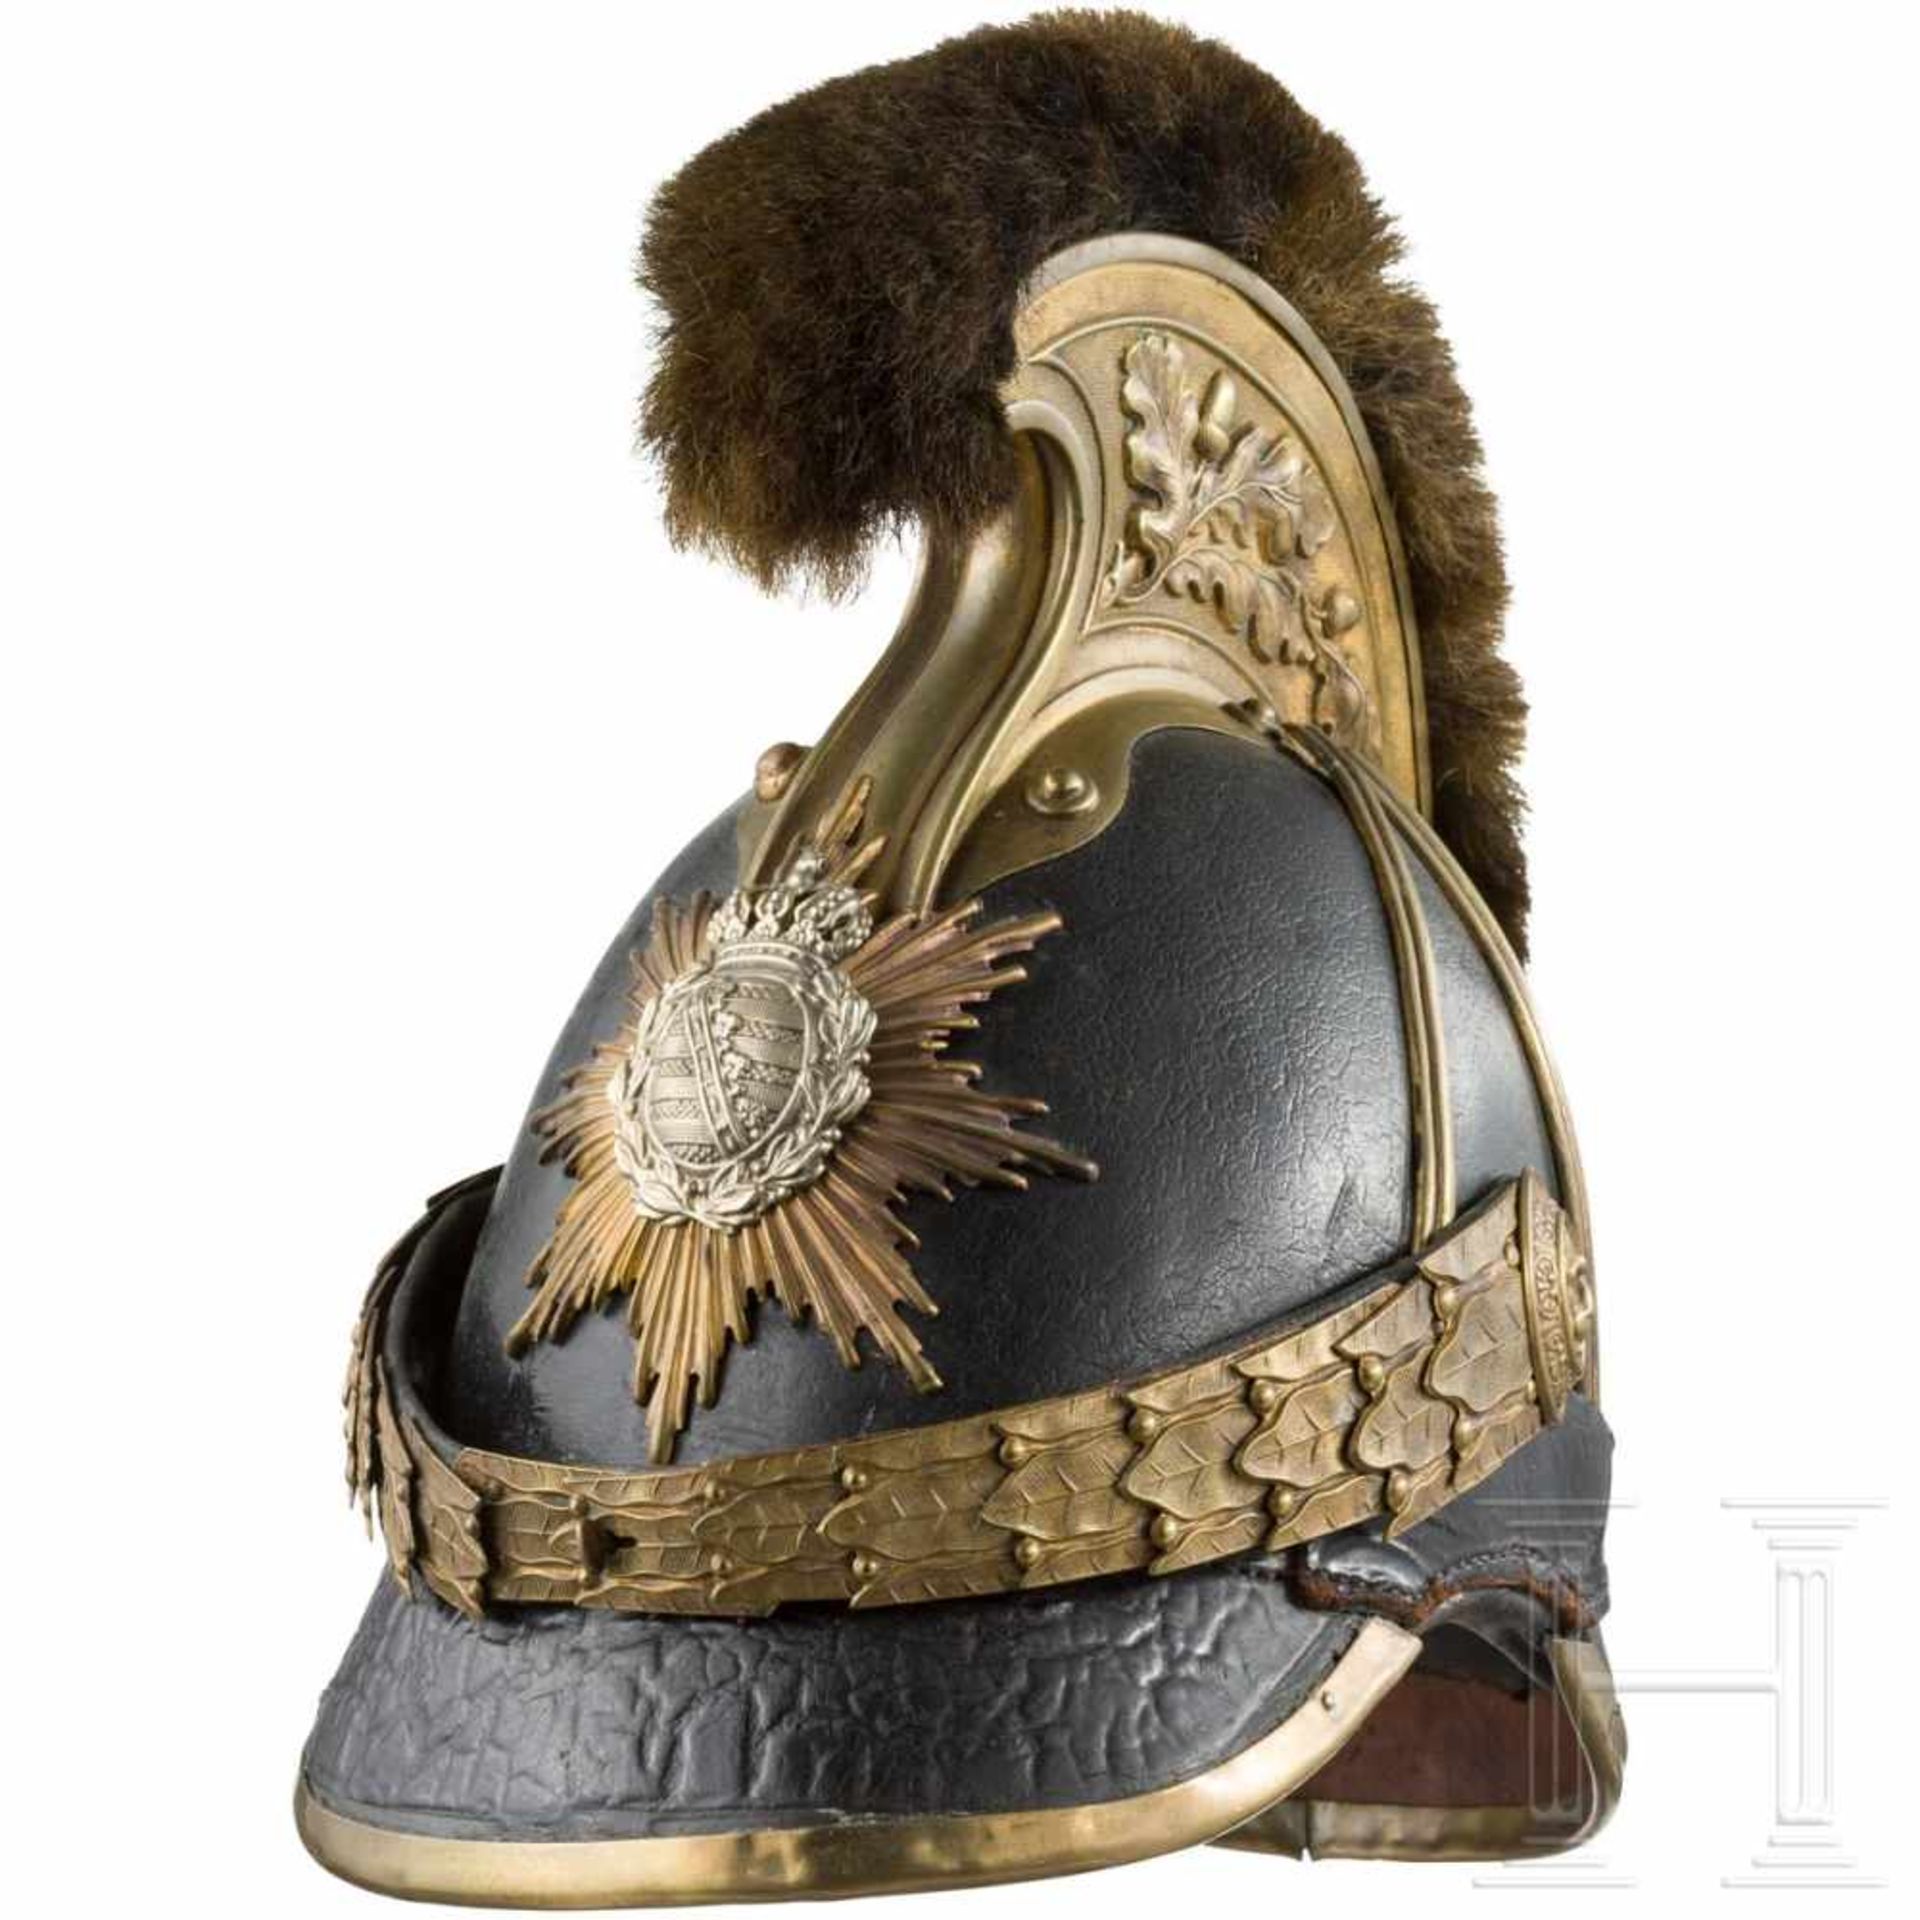 A helmet M 1867 for officers of the cavalry regimentsLederkorpus mit Messingbeschlägen.